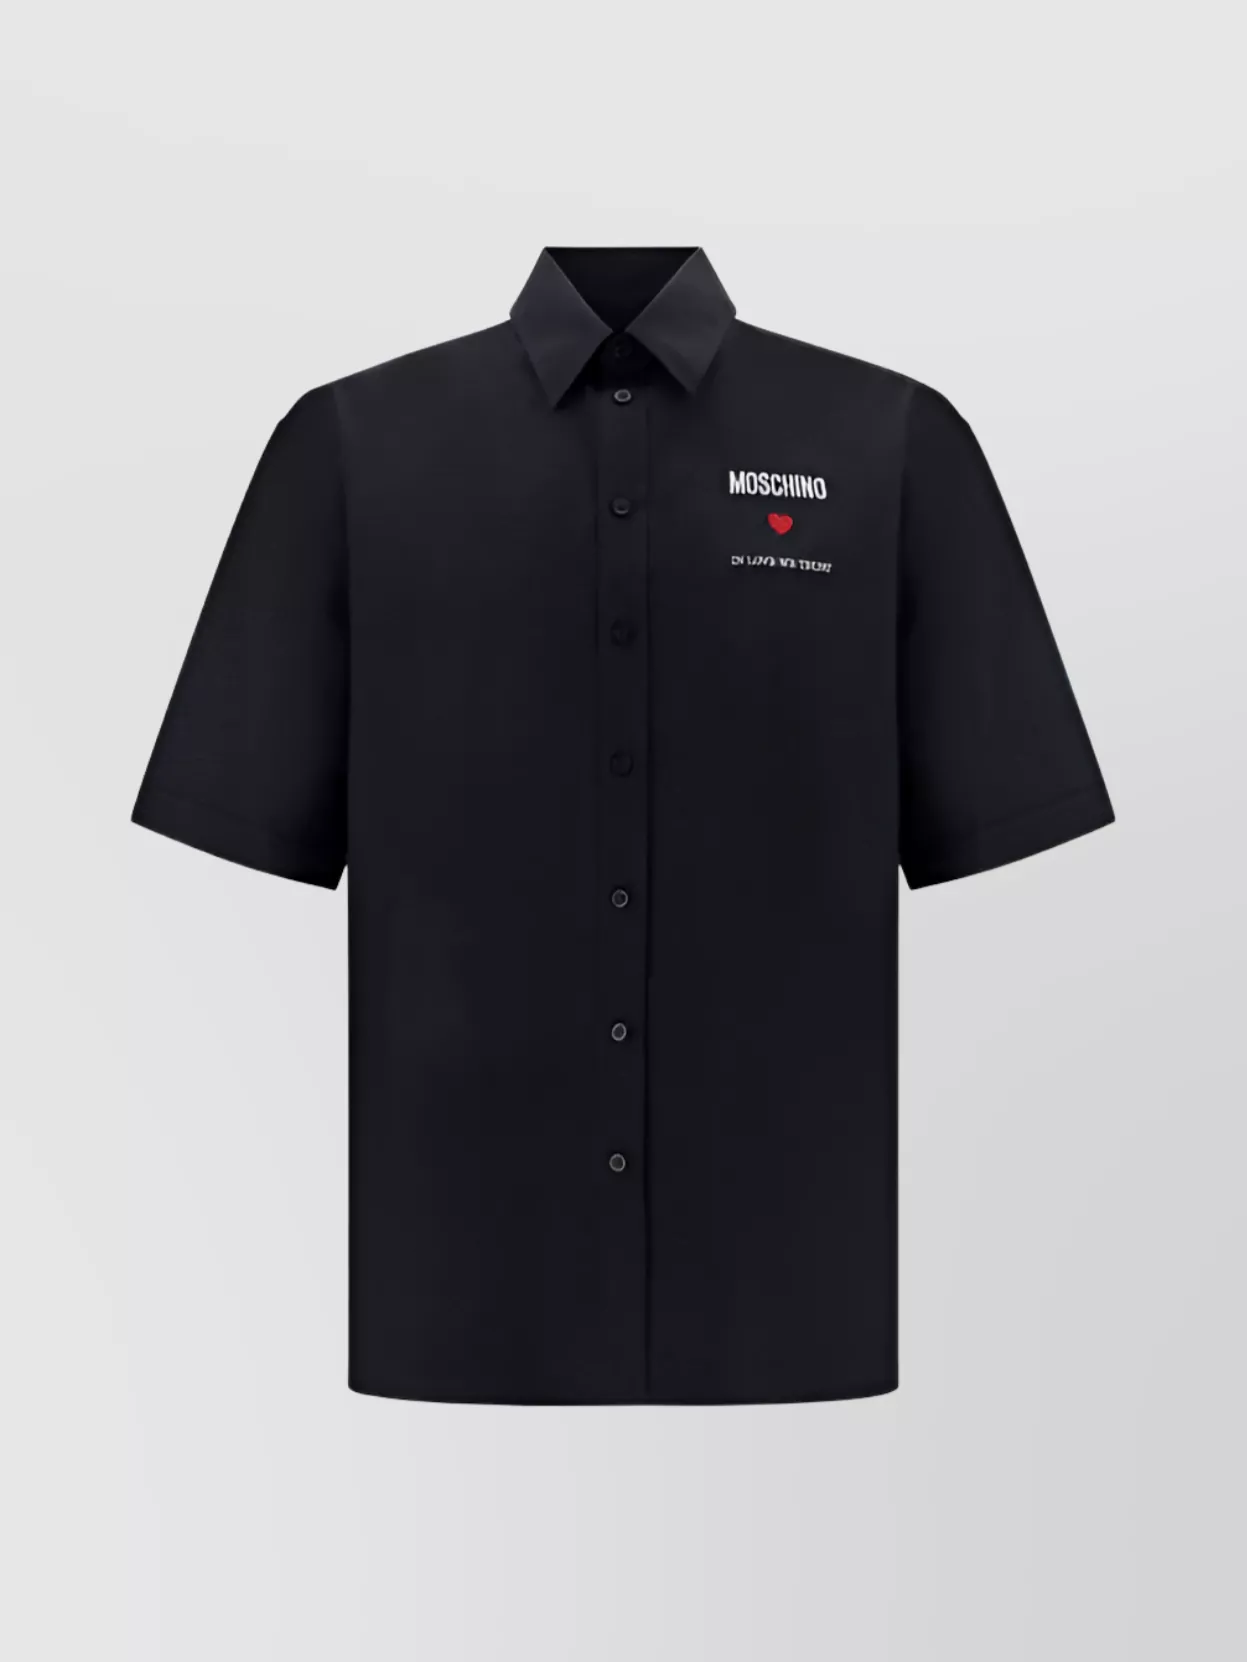 Moschino Short Sleeve Shirt In Black